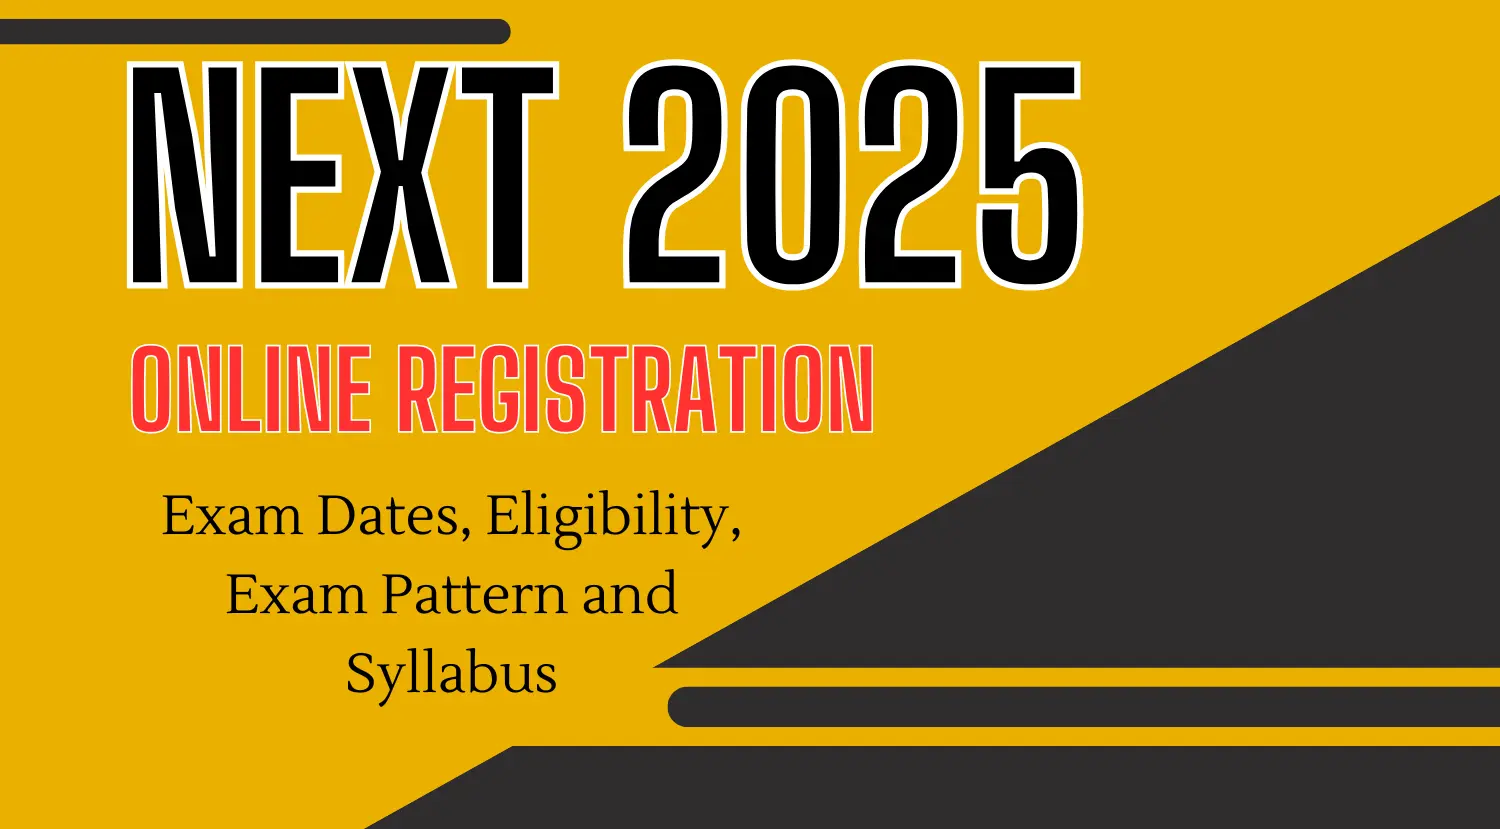 NExt 2025 Online Registration Exam Dates Eligibility Exam Pattern and Syllabus